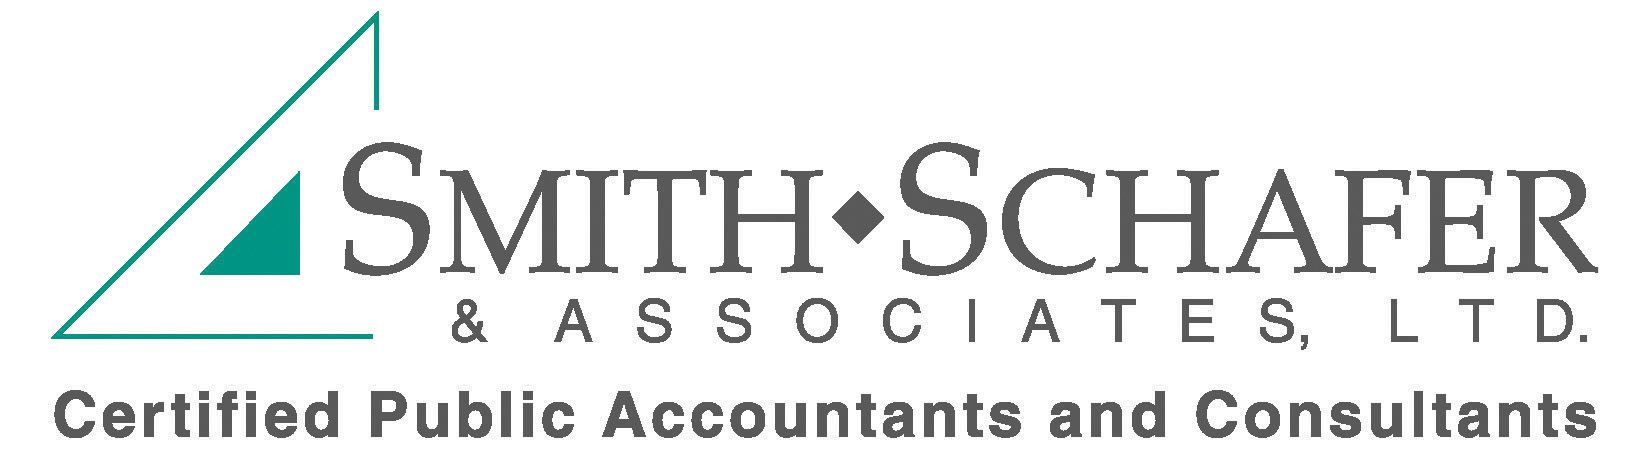 Smith Schafer & Associates, Ltd. logo